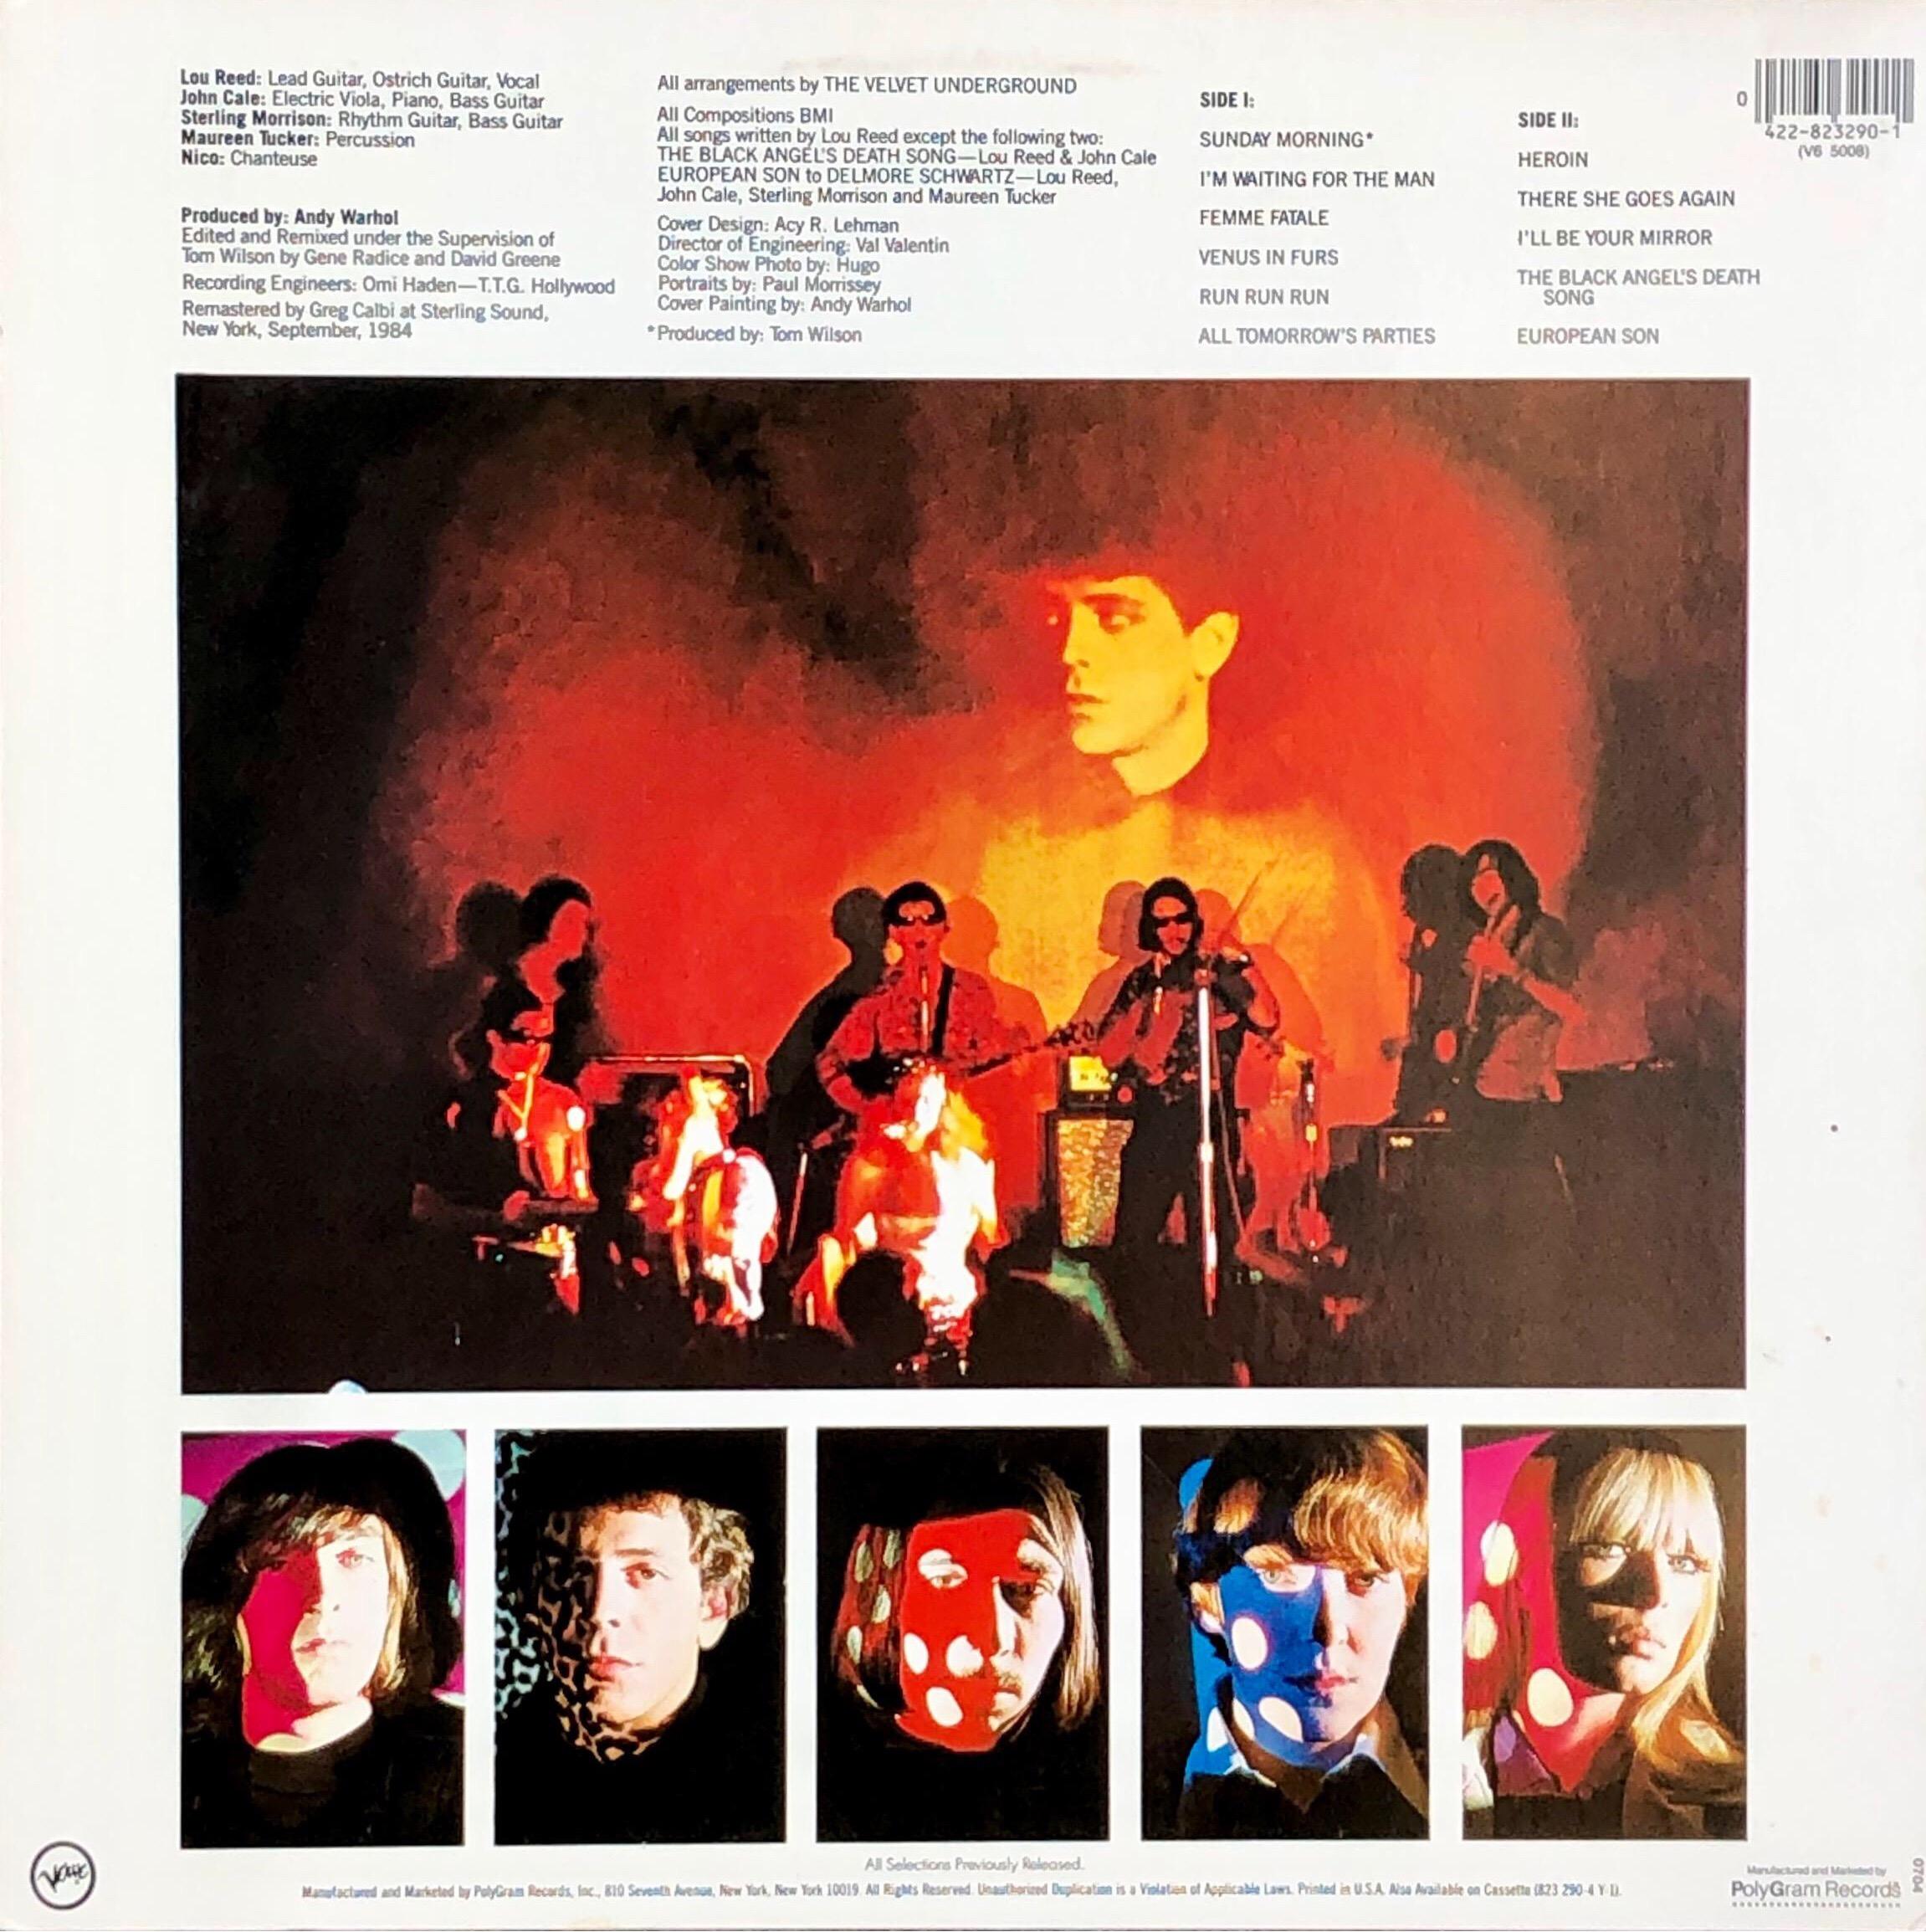 Warhol Banana Cover: Nico & The Velvet Underground Vinyl Record - Pop Art Print by Andy Warhol